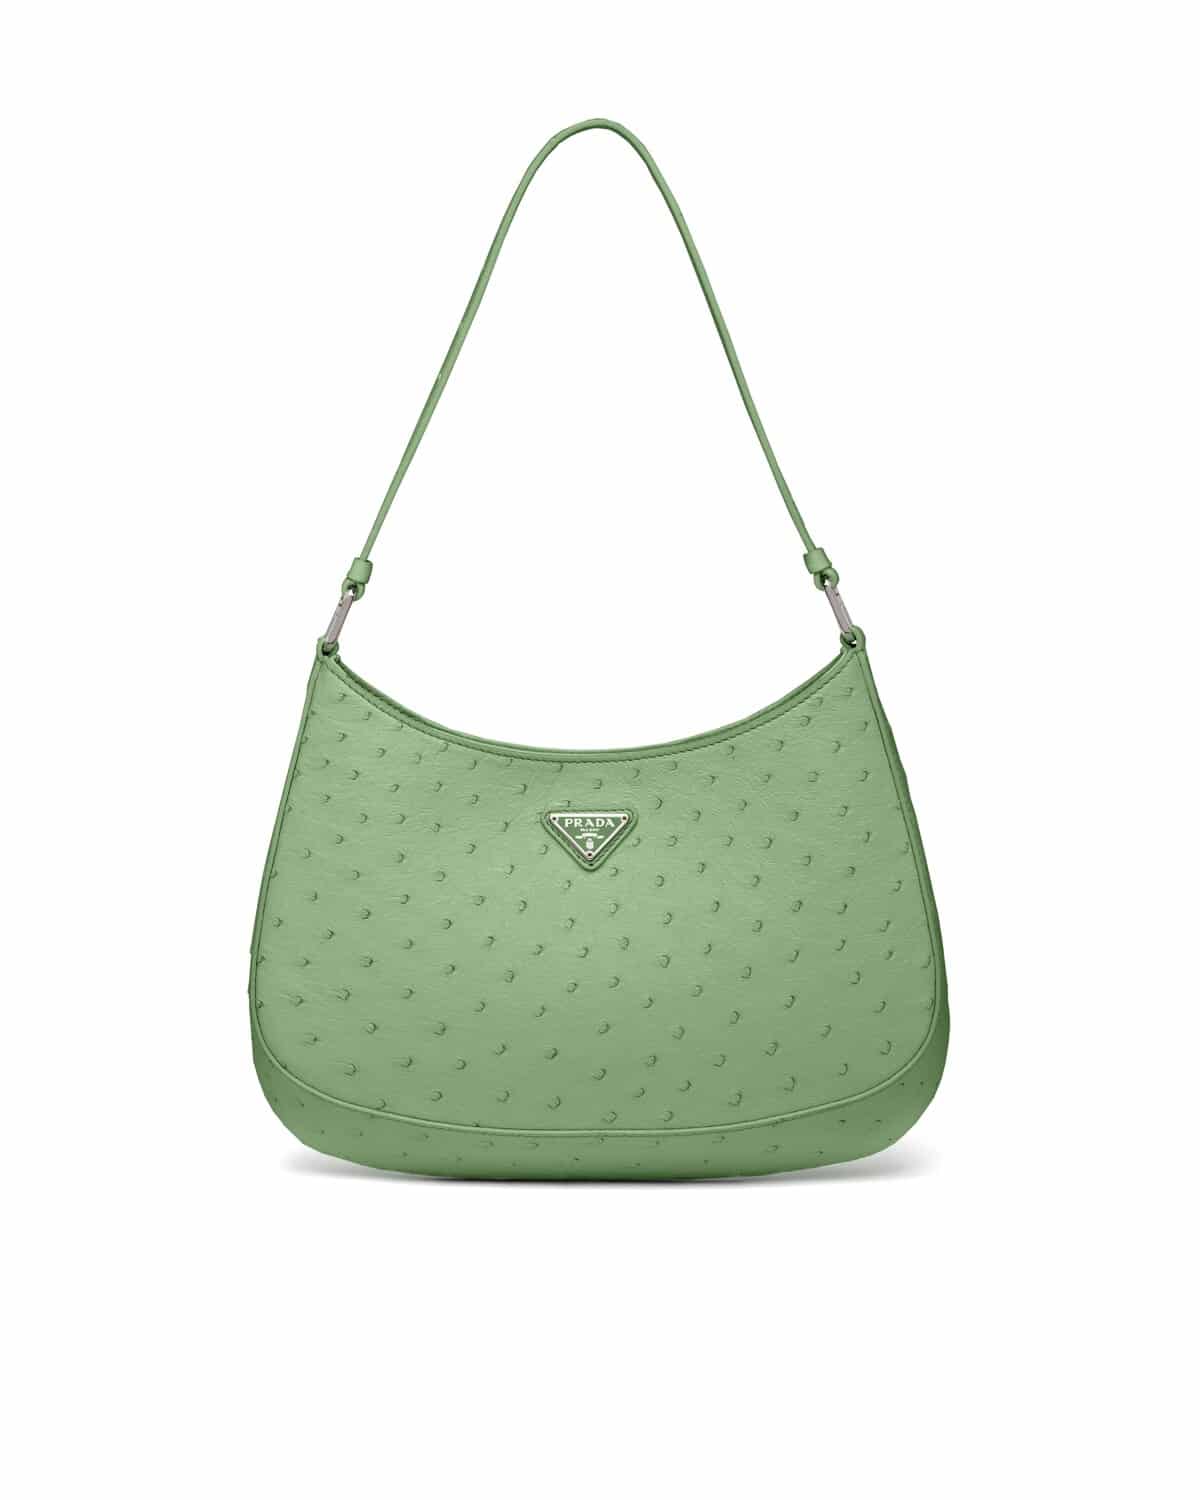 5 Reasons To Buy The Sleek Prada Cleo Bag Right Now!